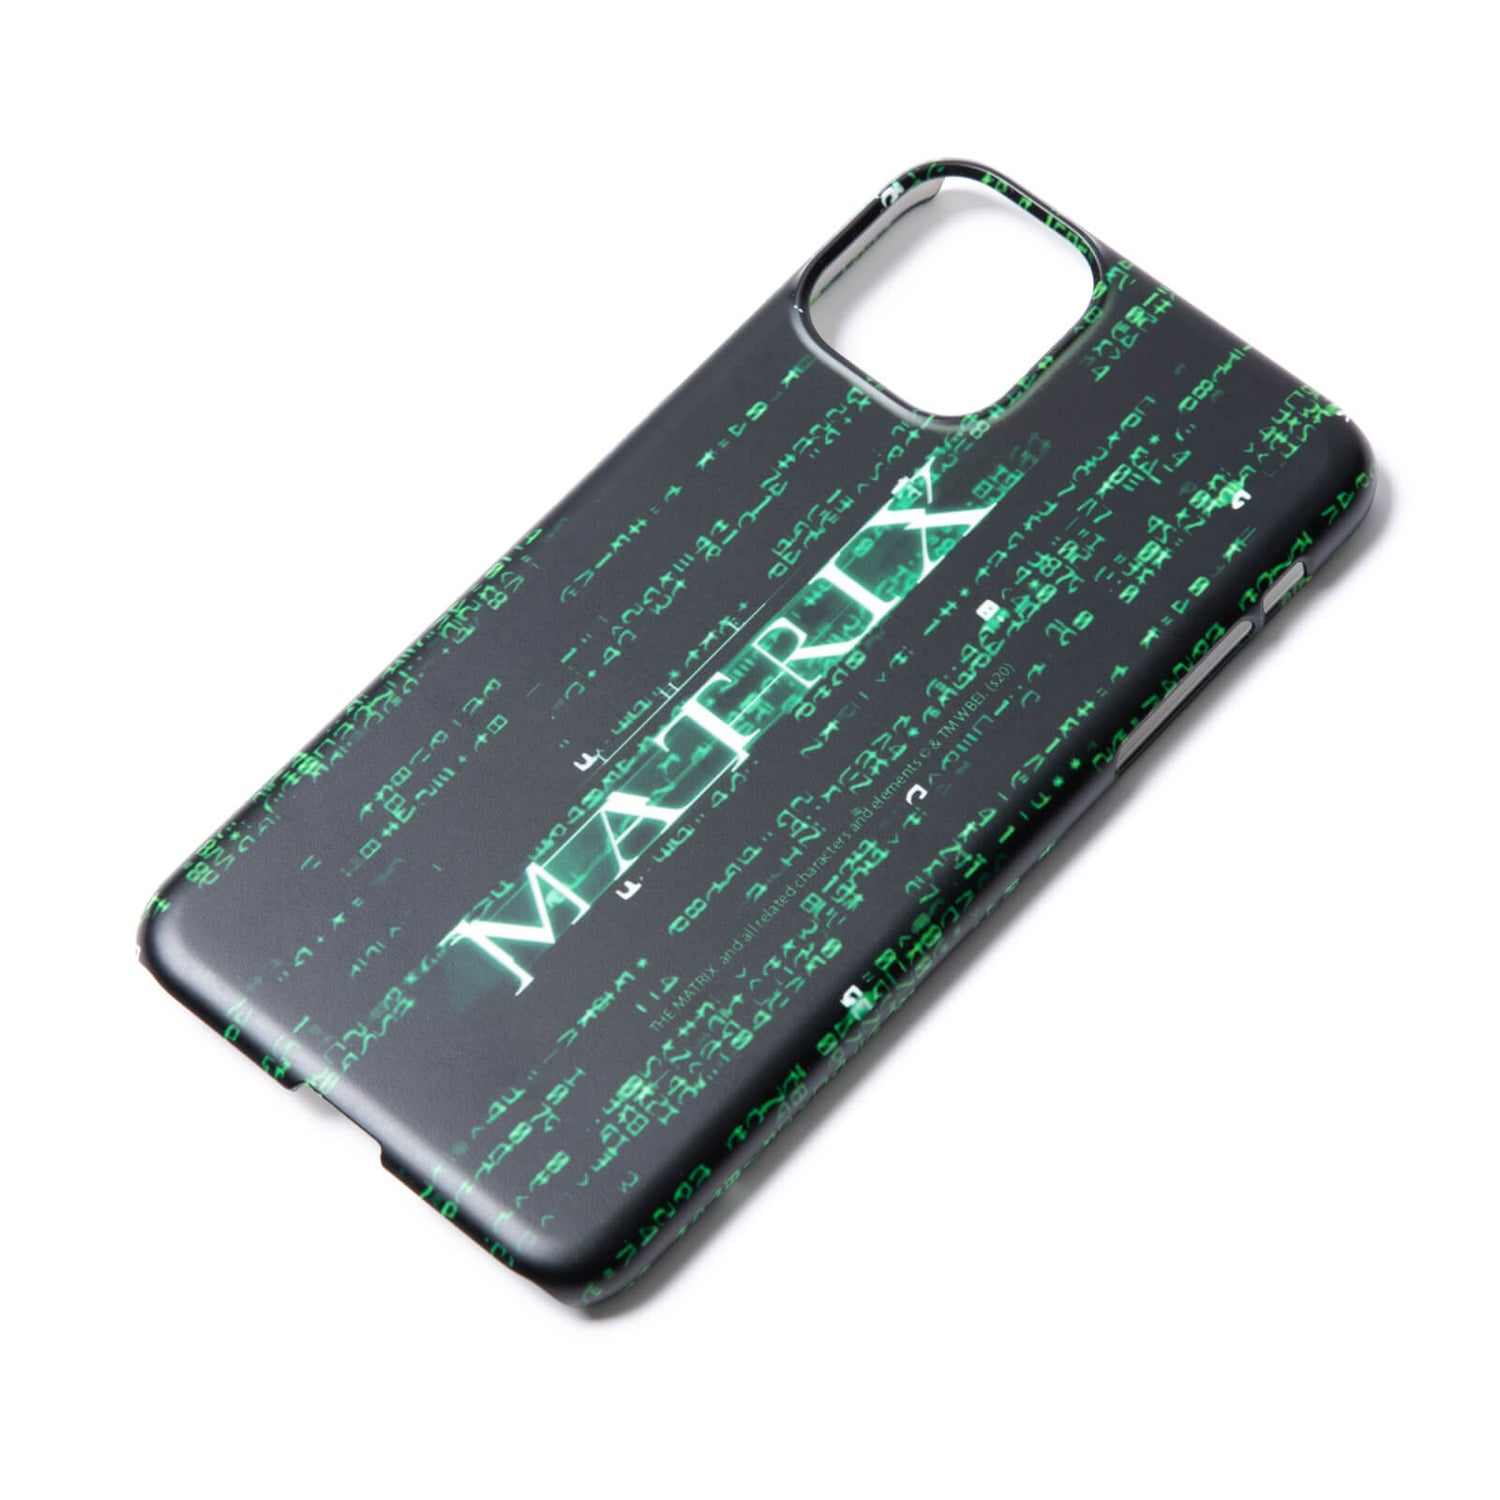 The Matrix Coque Smartphone pour iPhone et Android